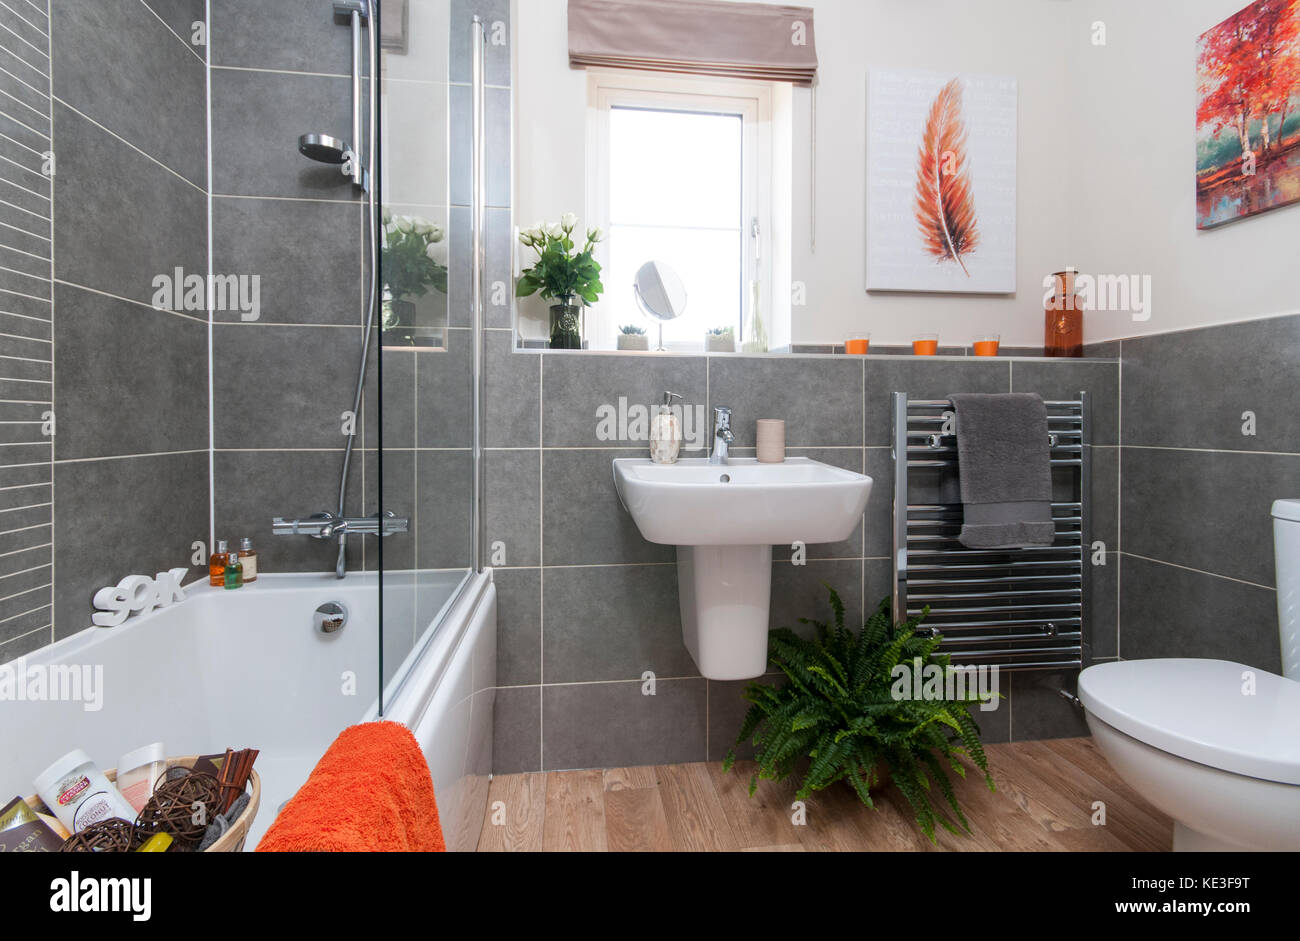 Family bathroom with grey tiles and towel radiator Stock Photo